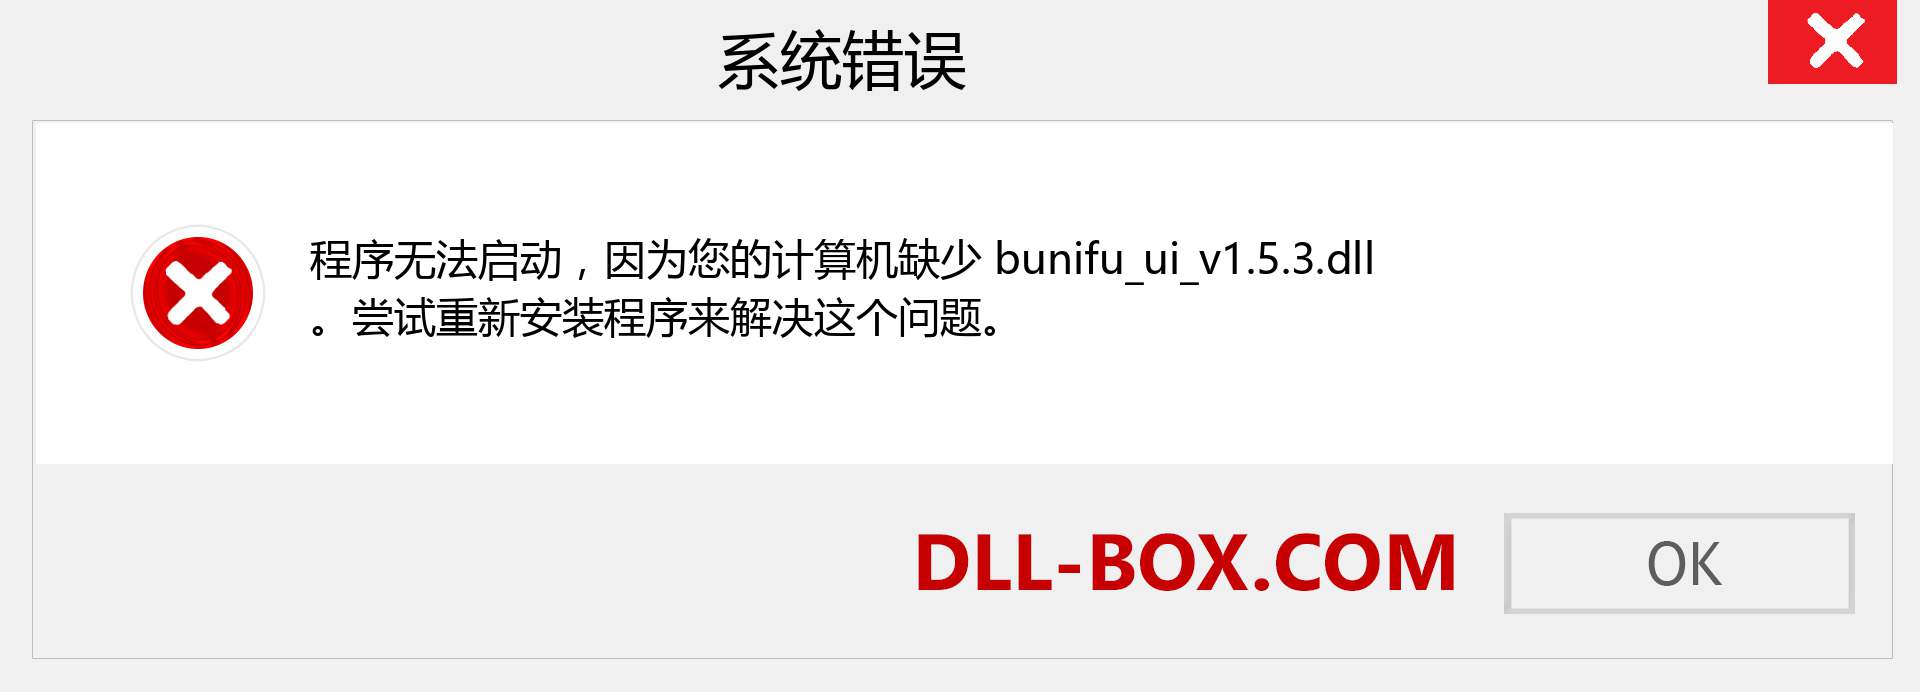 bunifu_ui_v1.5.3.dll 文件丢失？。 适用于 Windows 7、8、10 的下载 - 修复 Windows、照片、图像上的 bunifu_ui_v1.5.3 dll 丢失错误